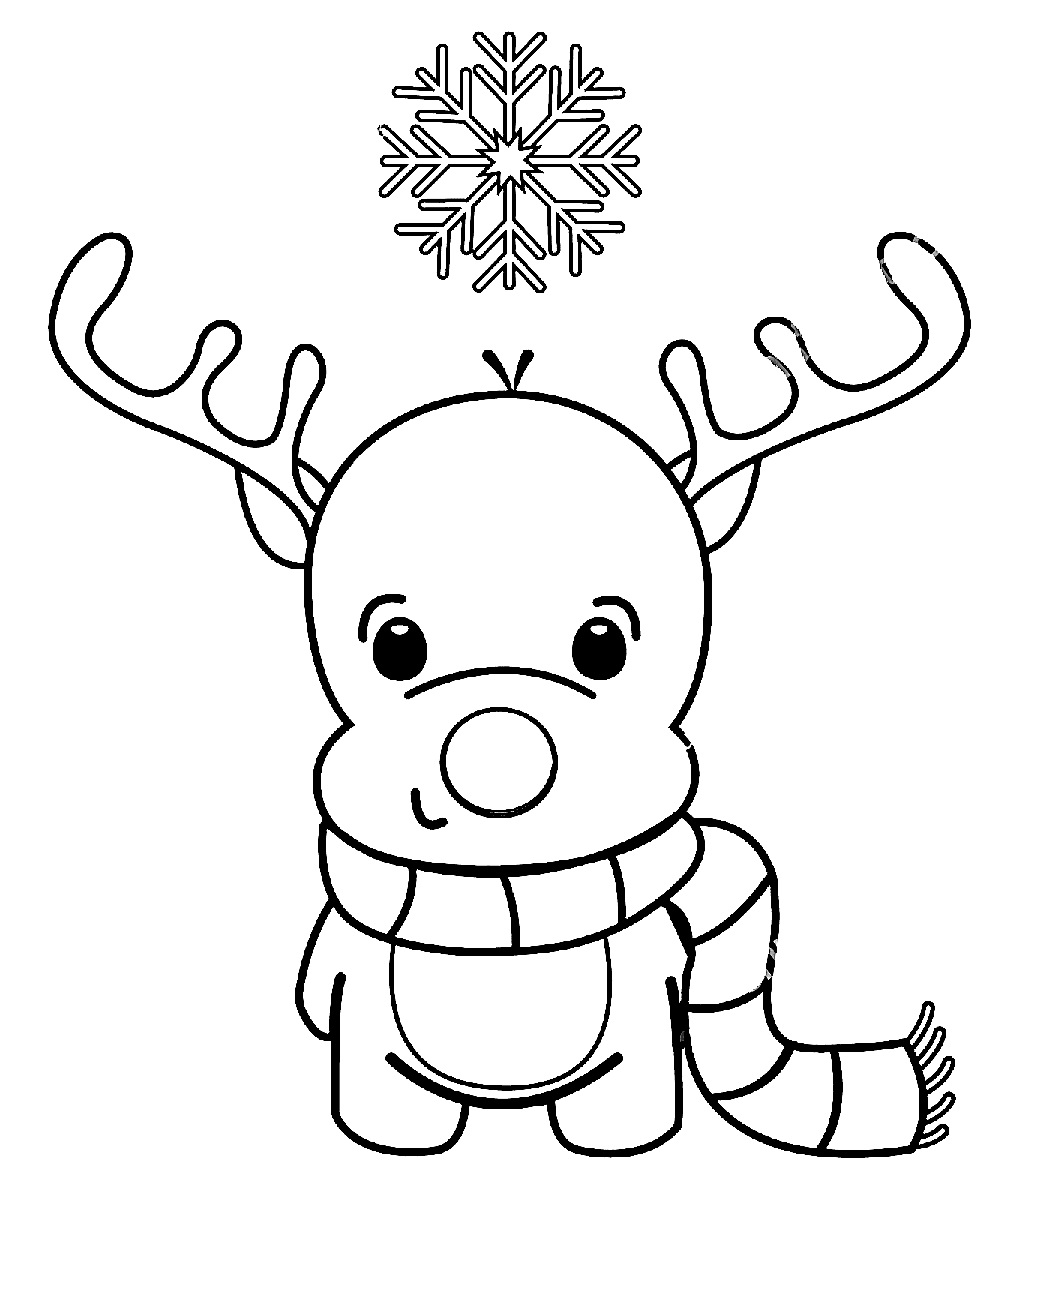 Cute reindeer with snowflake coloring page